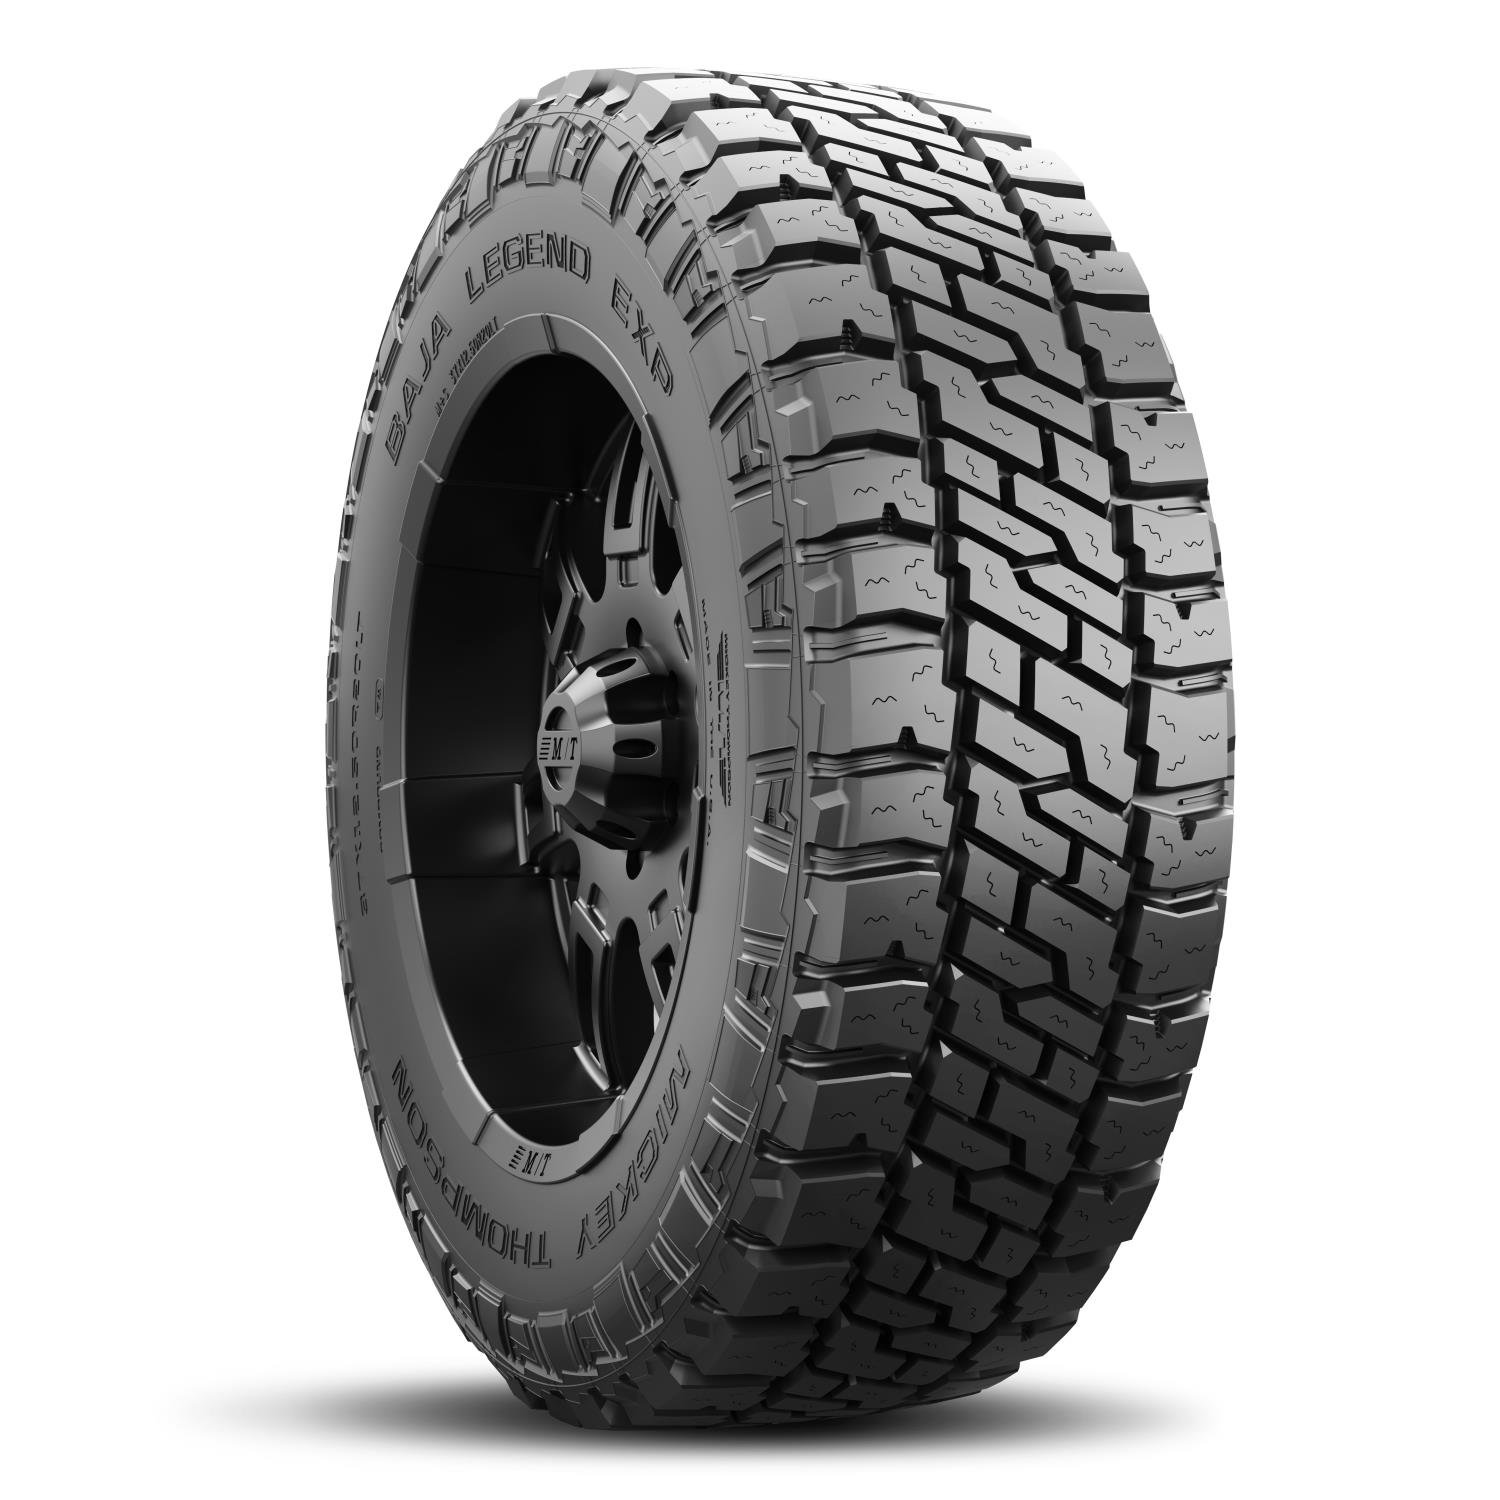 Baja Legend EXP Tire LT295/65R20